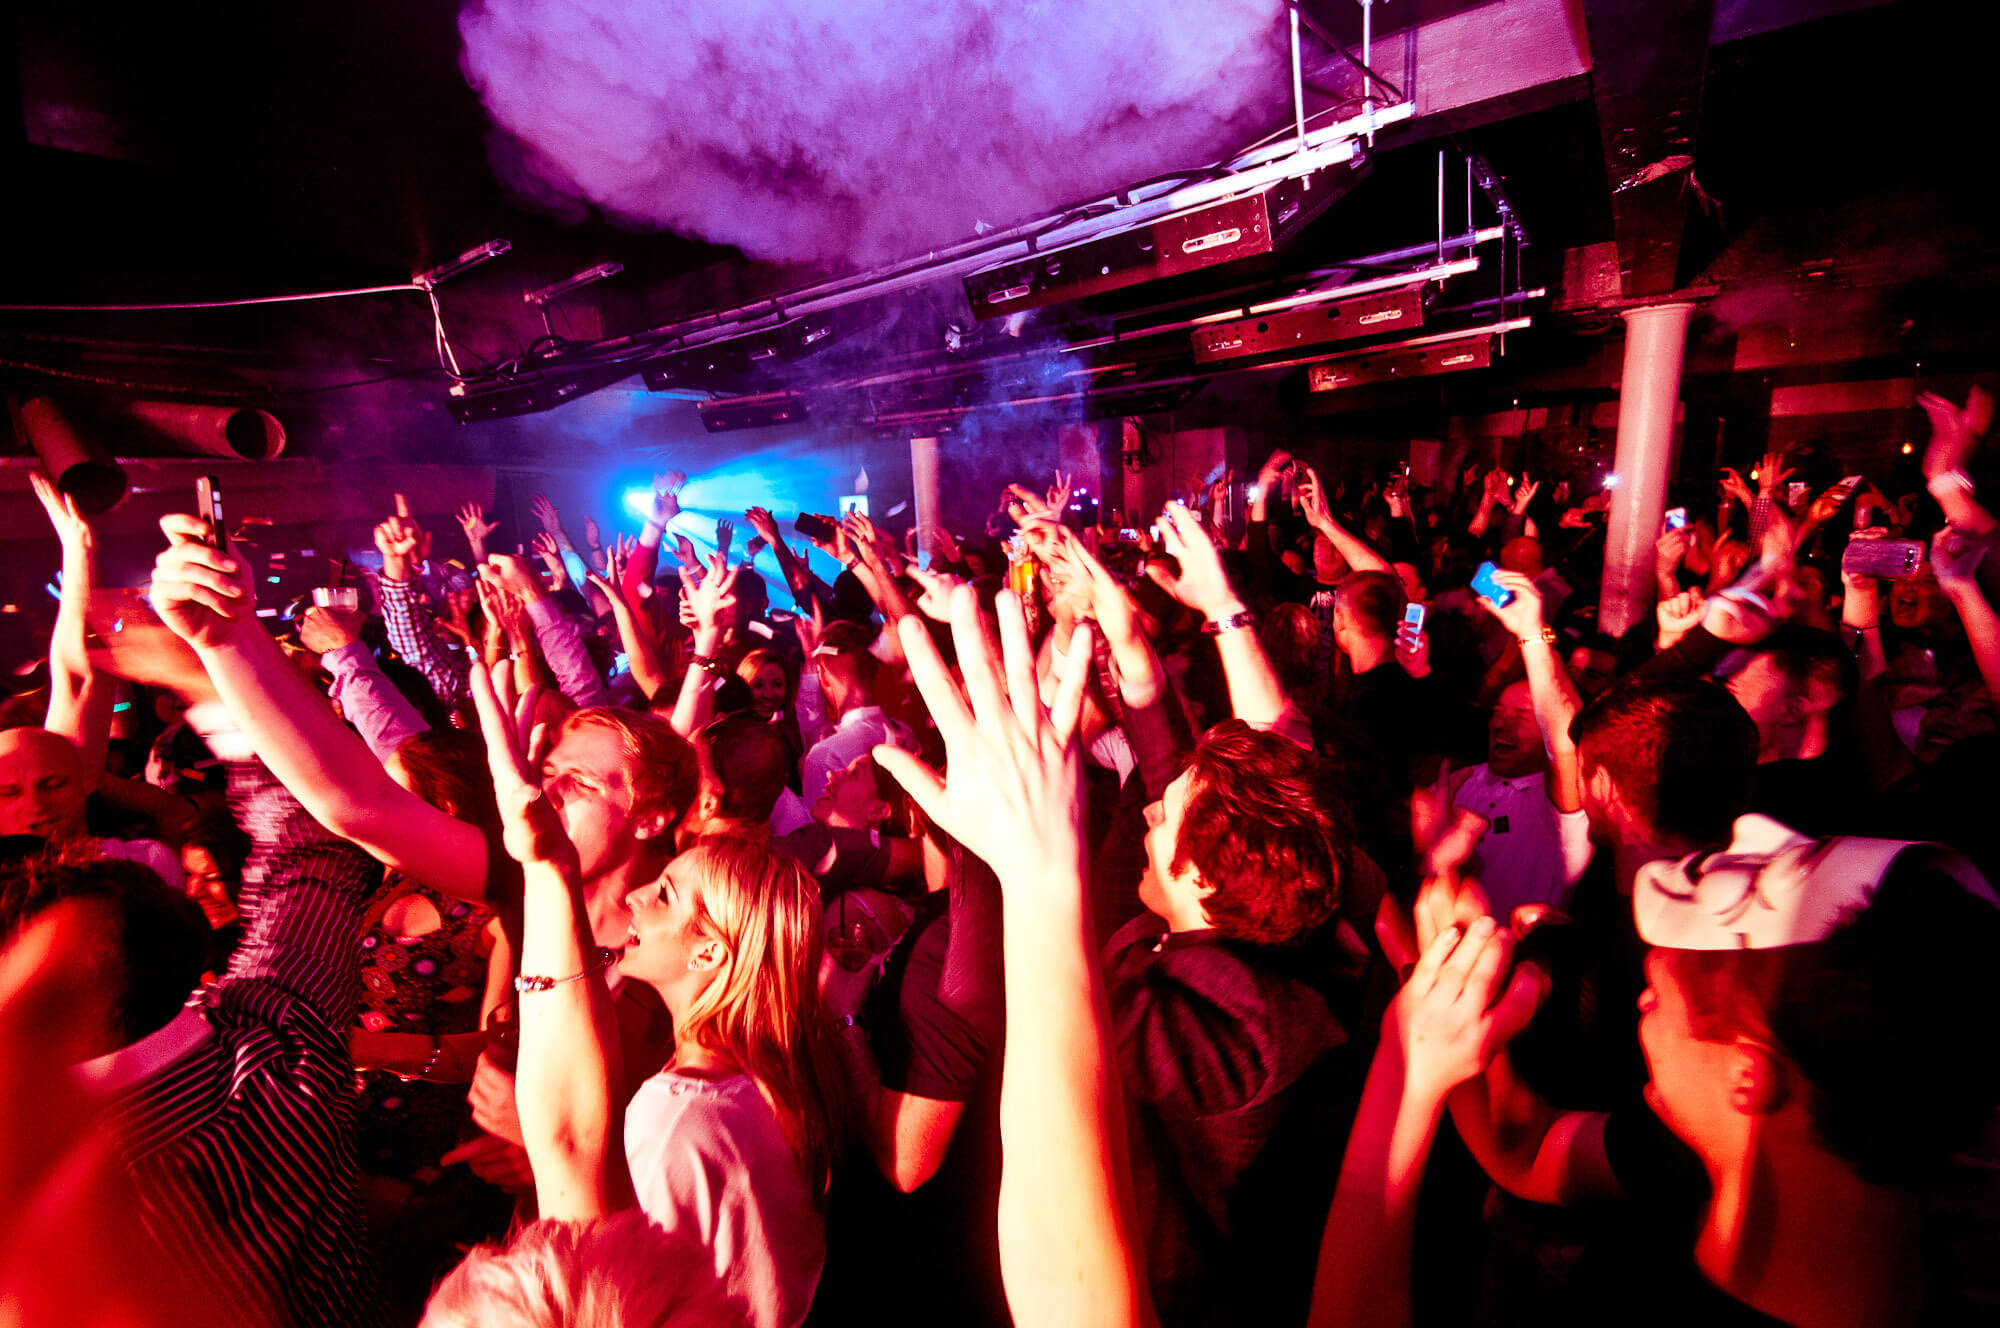 Egg London Nightclub in St Pancras, people partying